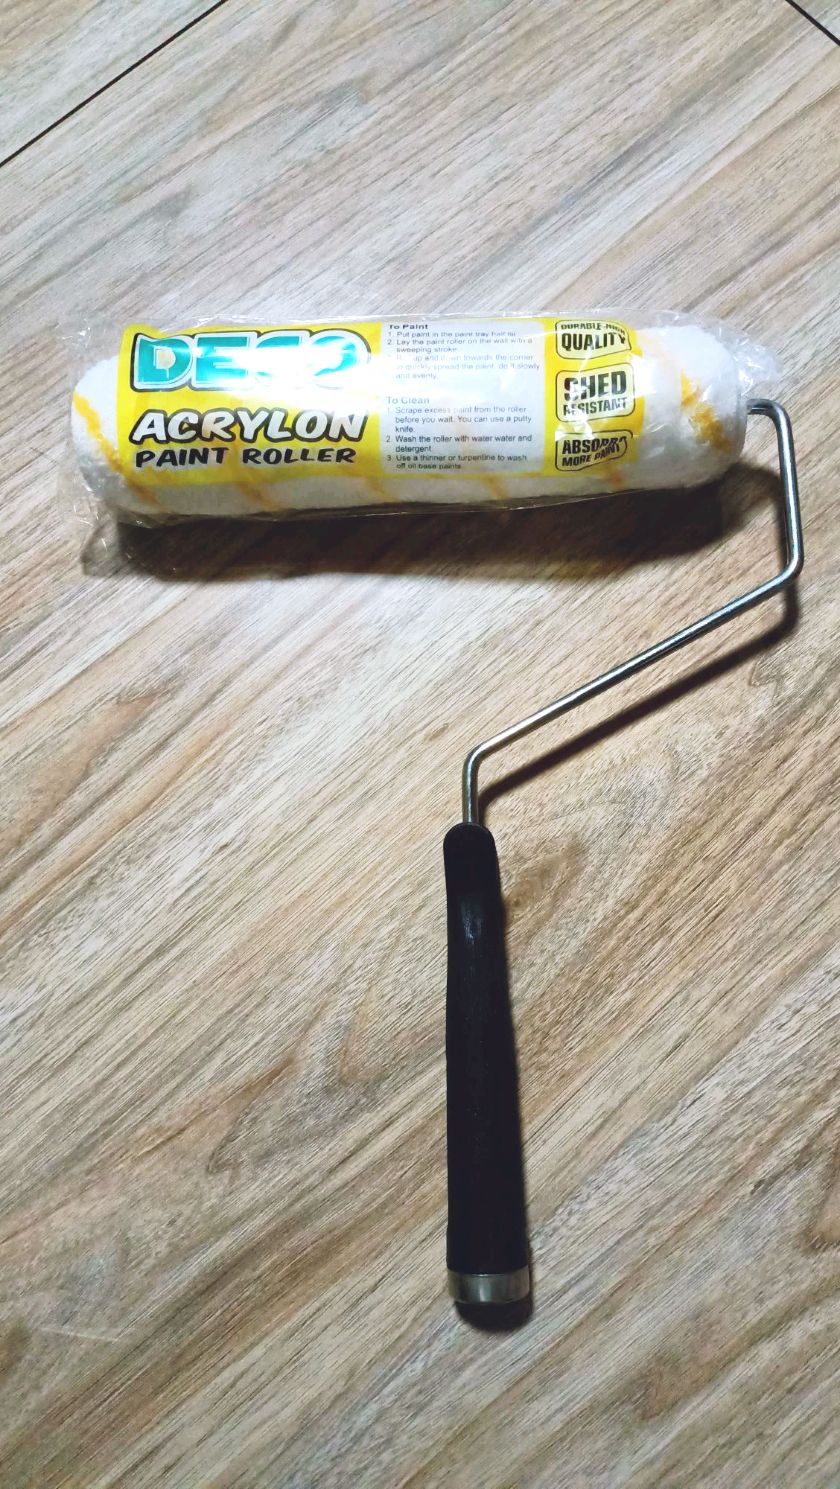 deco acrylon paint roller with handle | Lazada PH